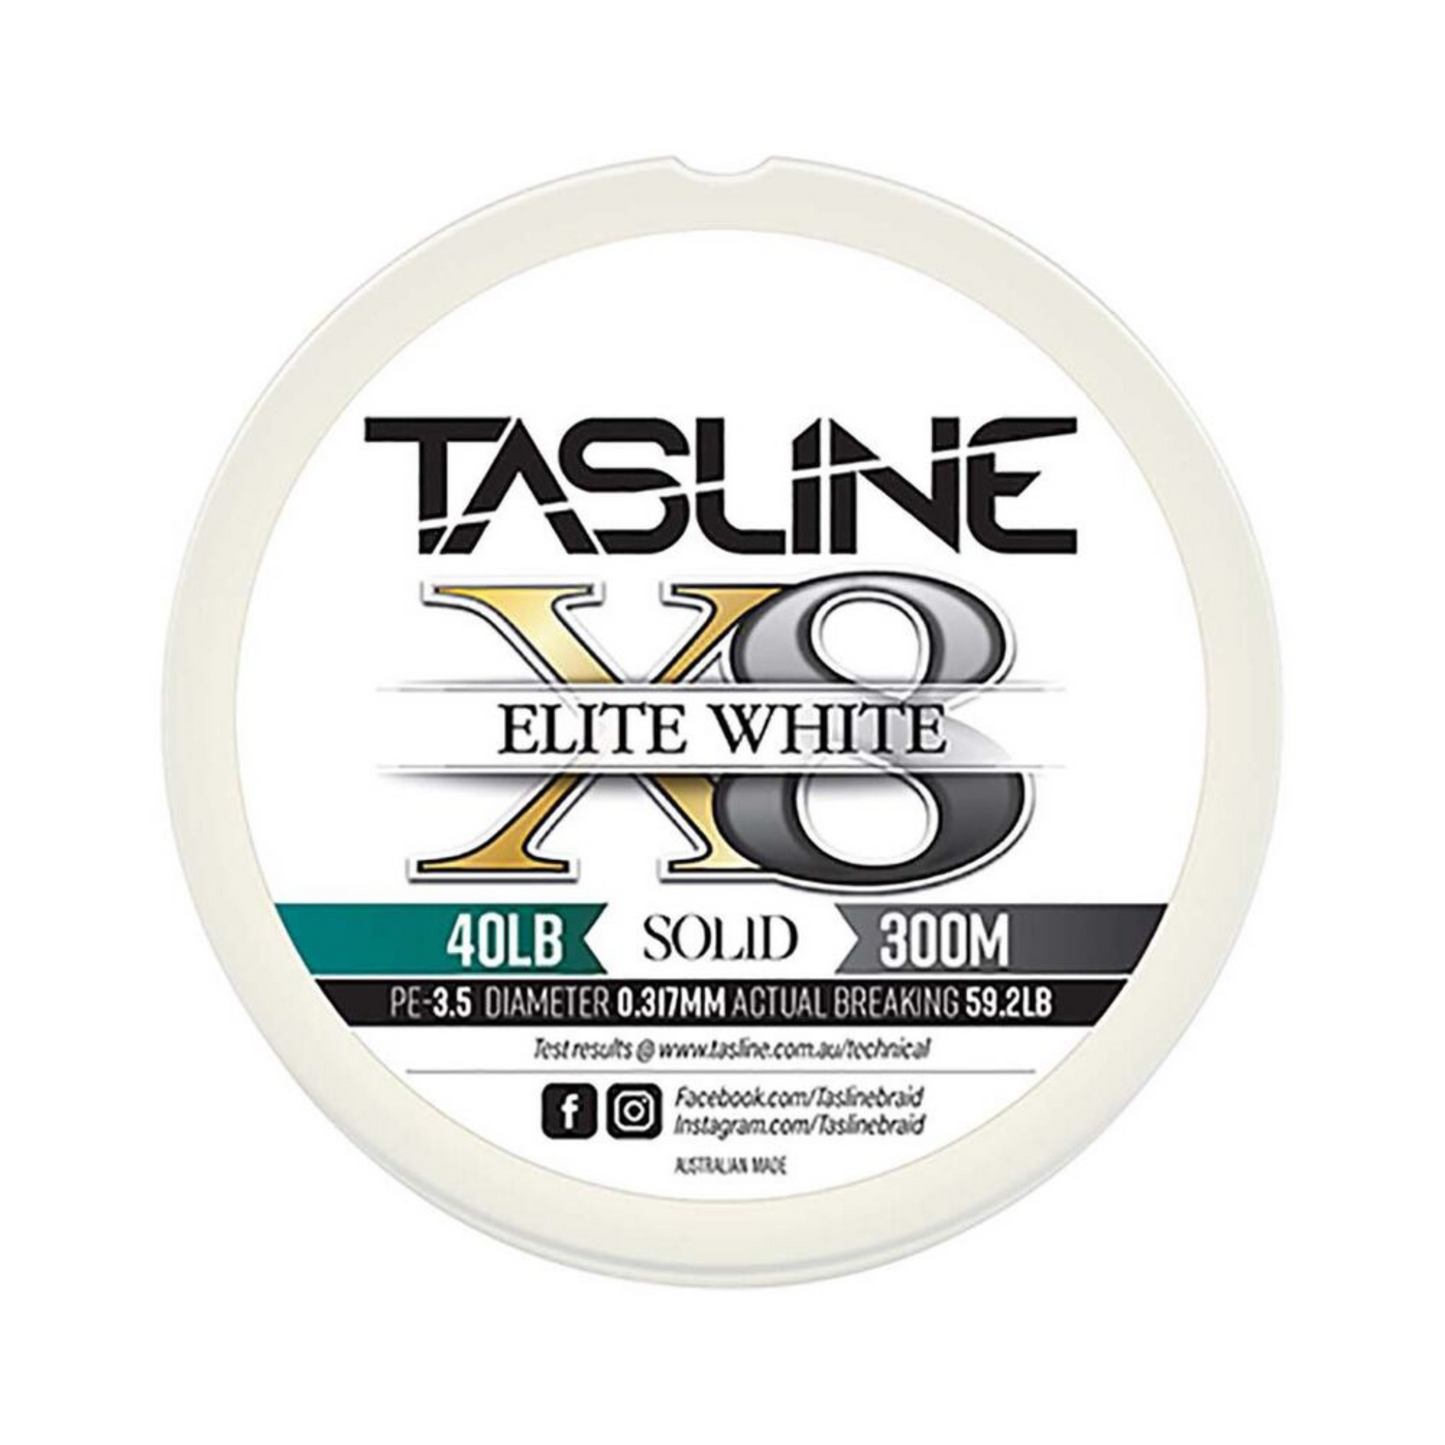 TASLINE ELITE X8 PURE 300m WHITE